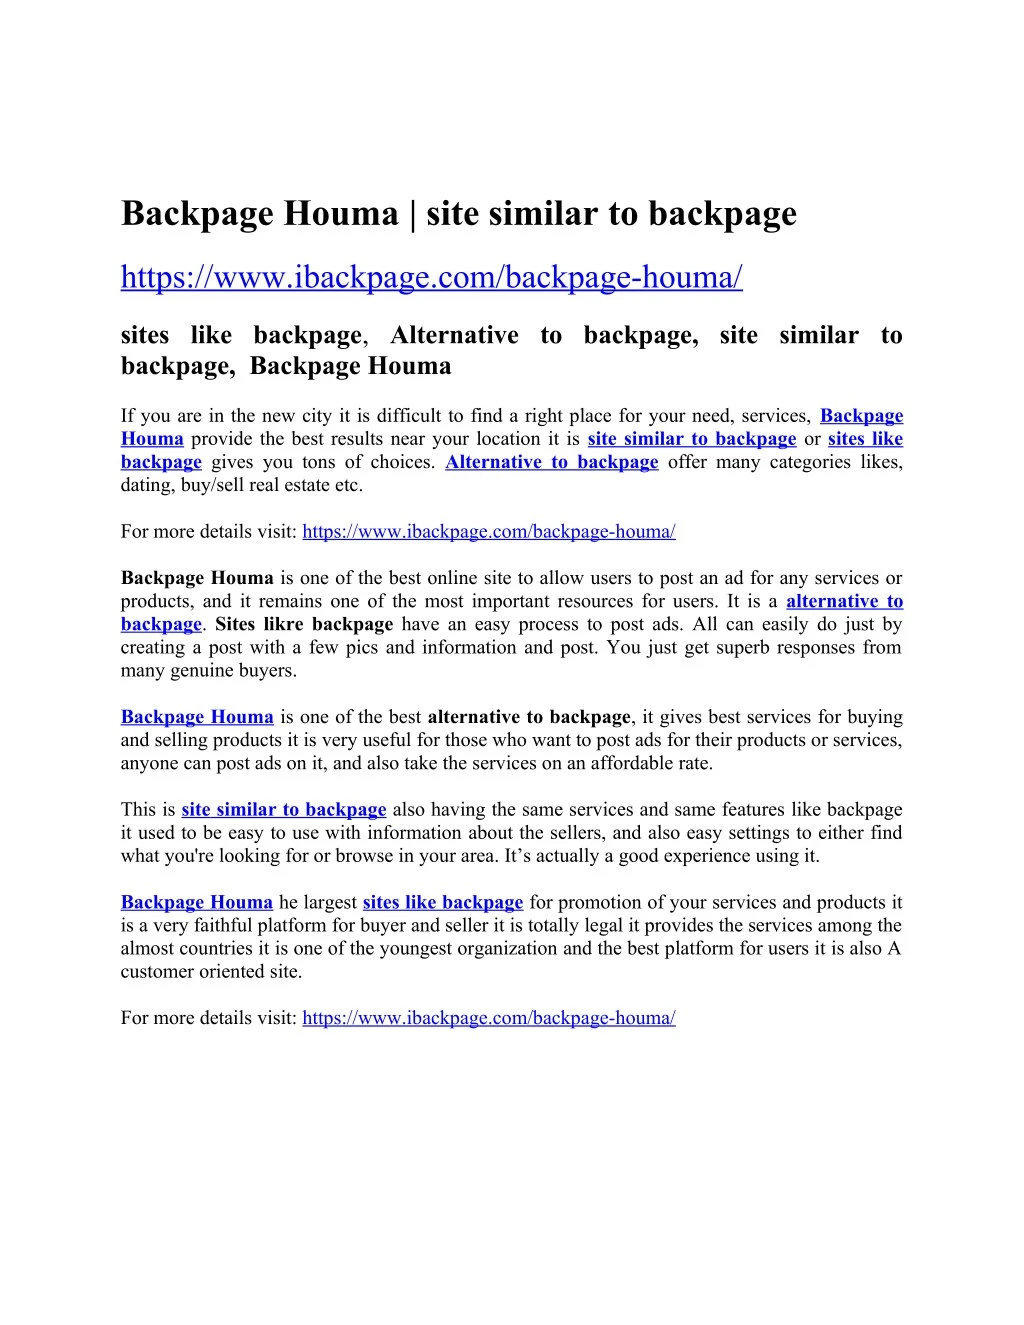 backpage houma site similar to backpage